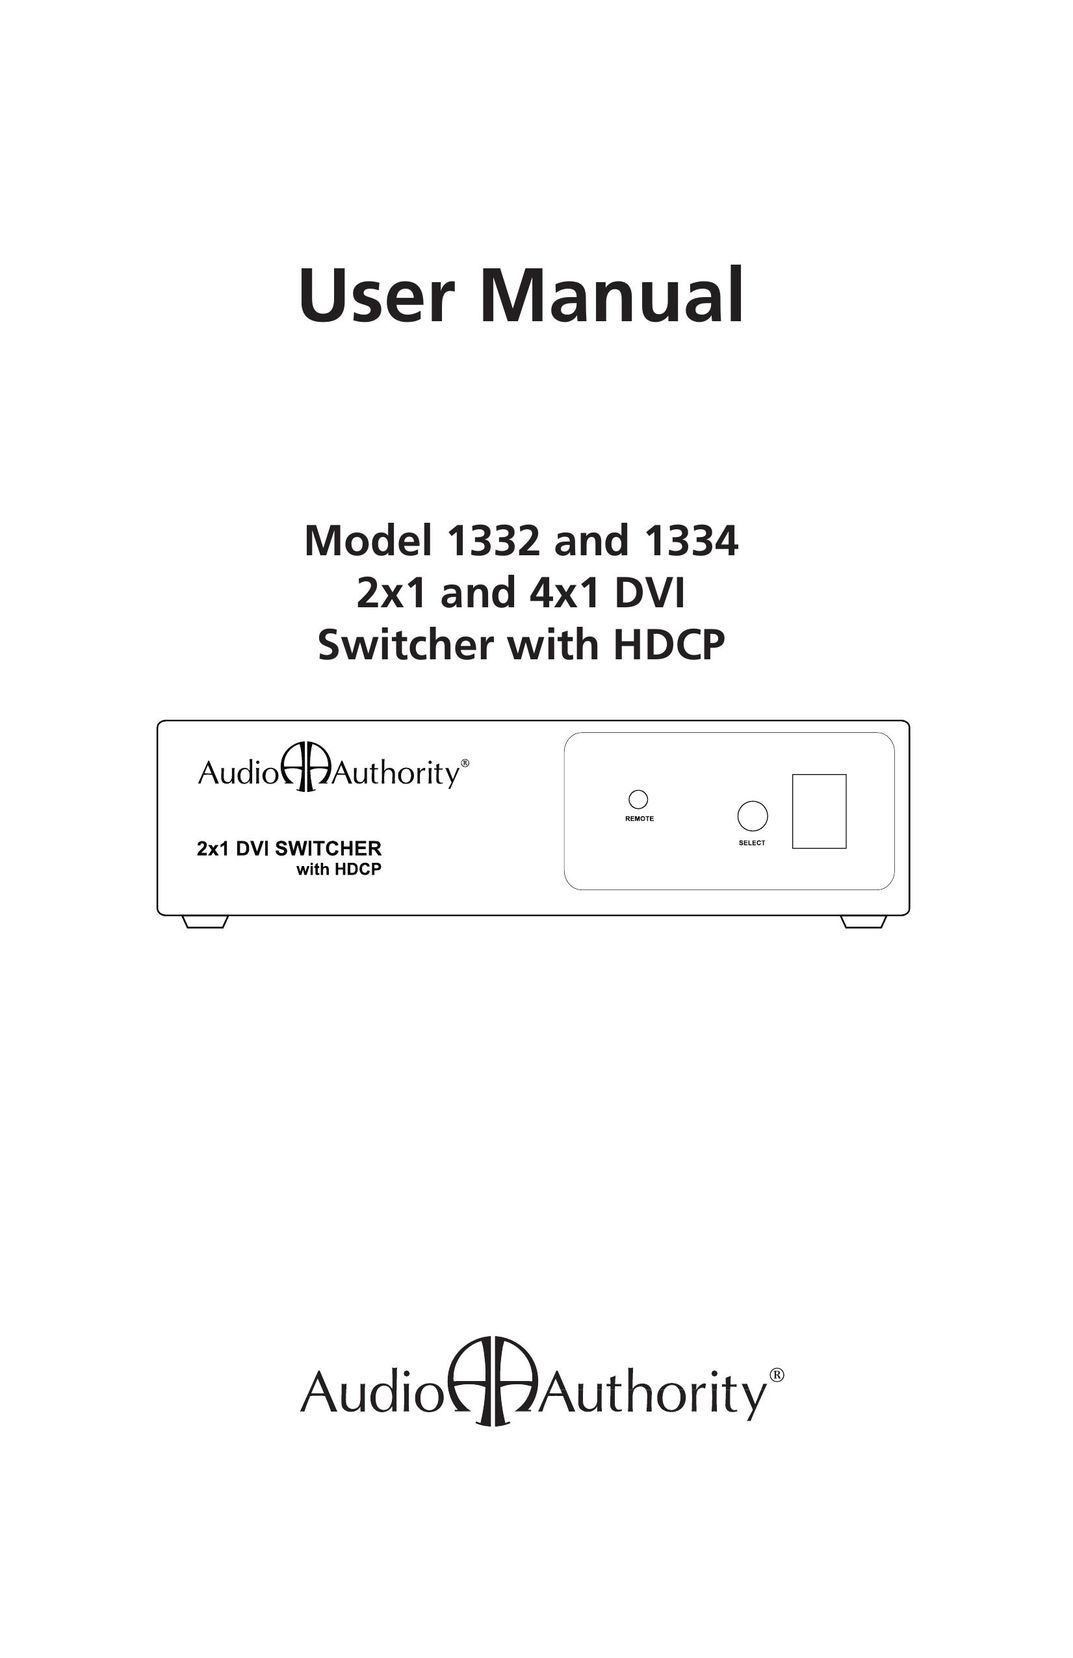 Audio Authority 1334 Switch User Manual